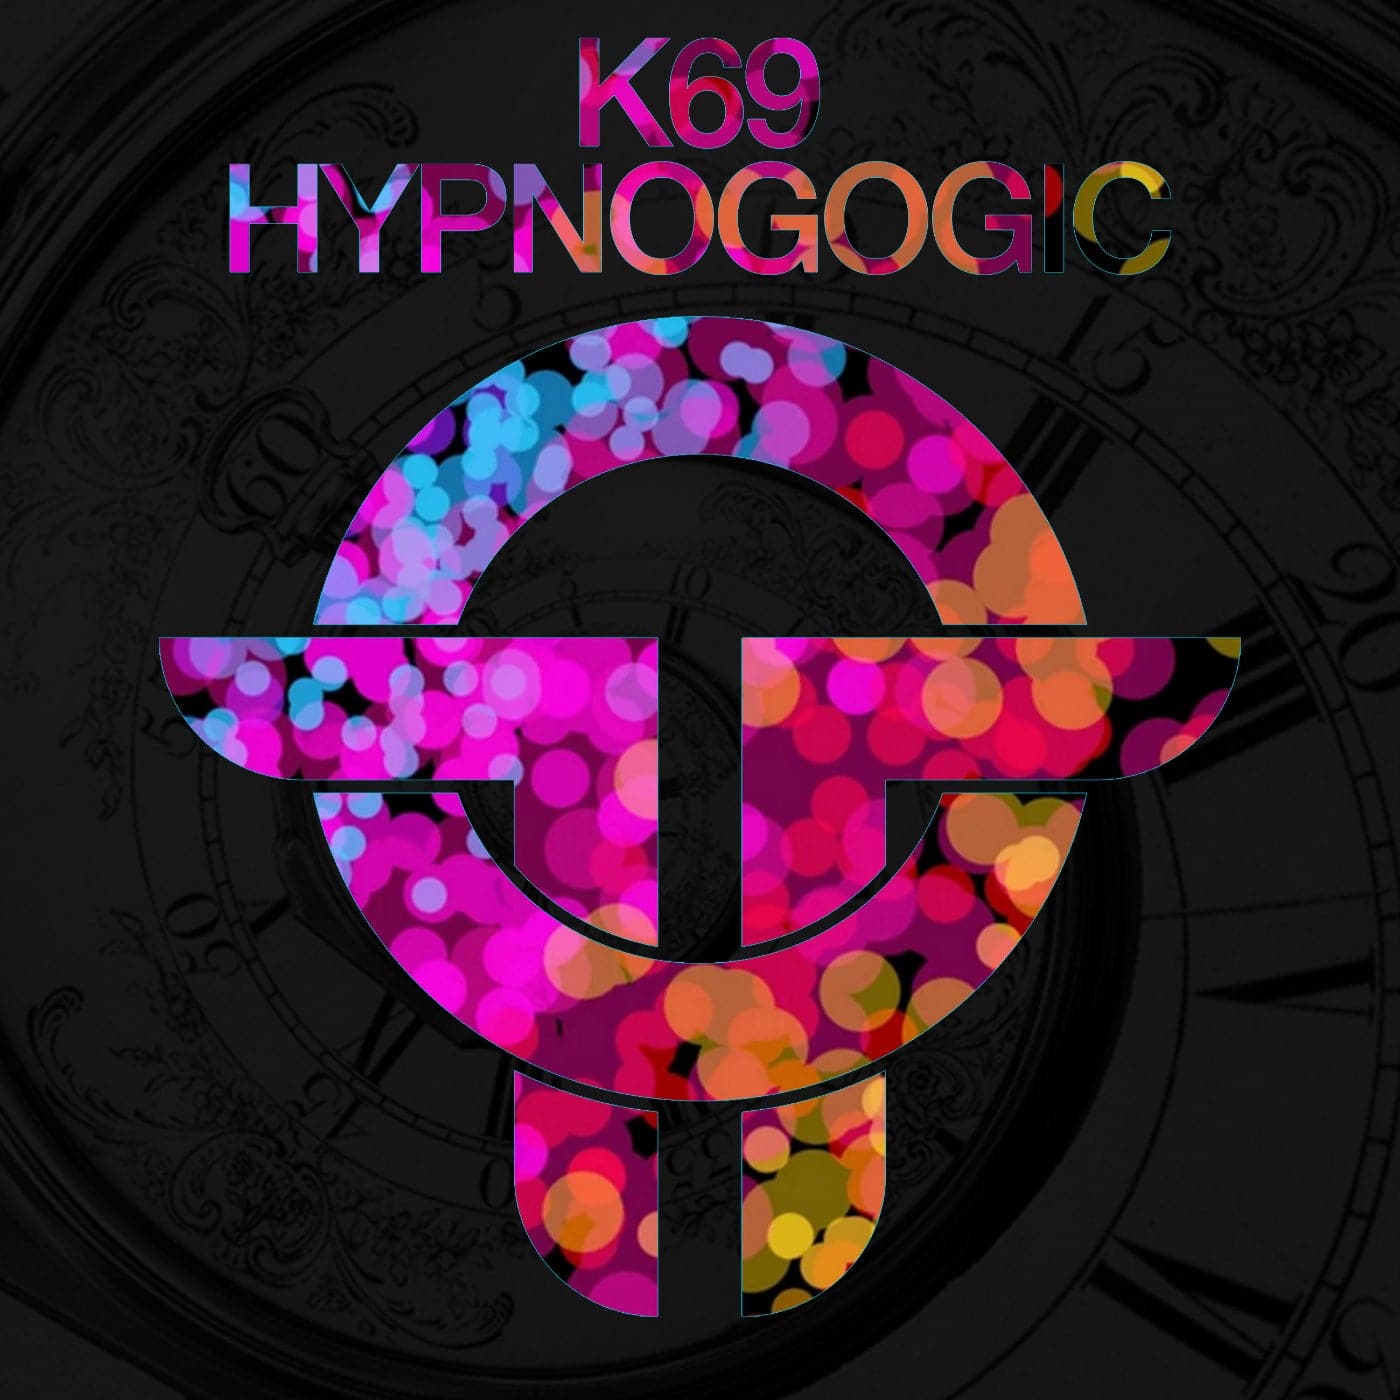 image cover: K69 - Hypnogogic / TOT089